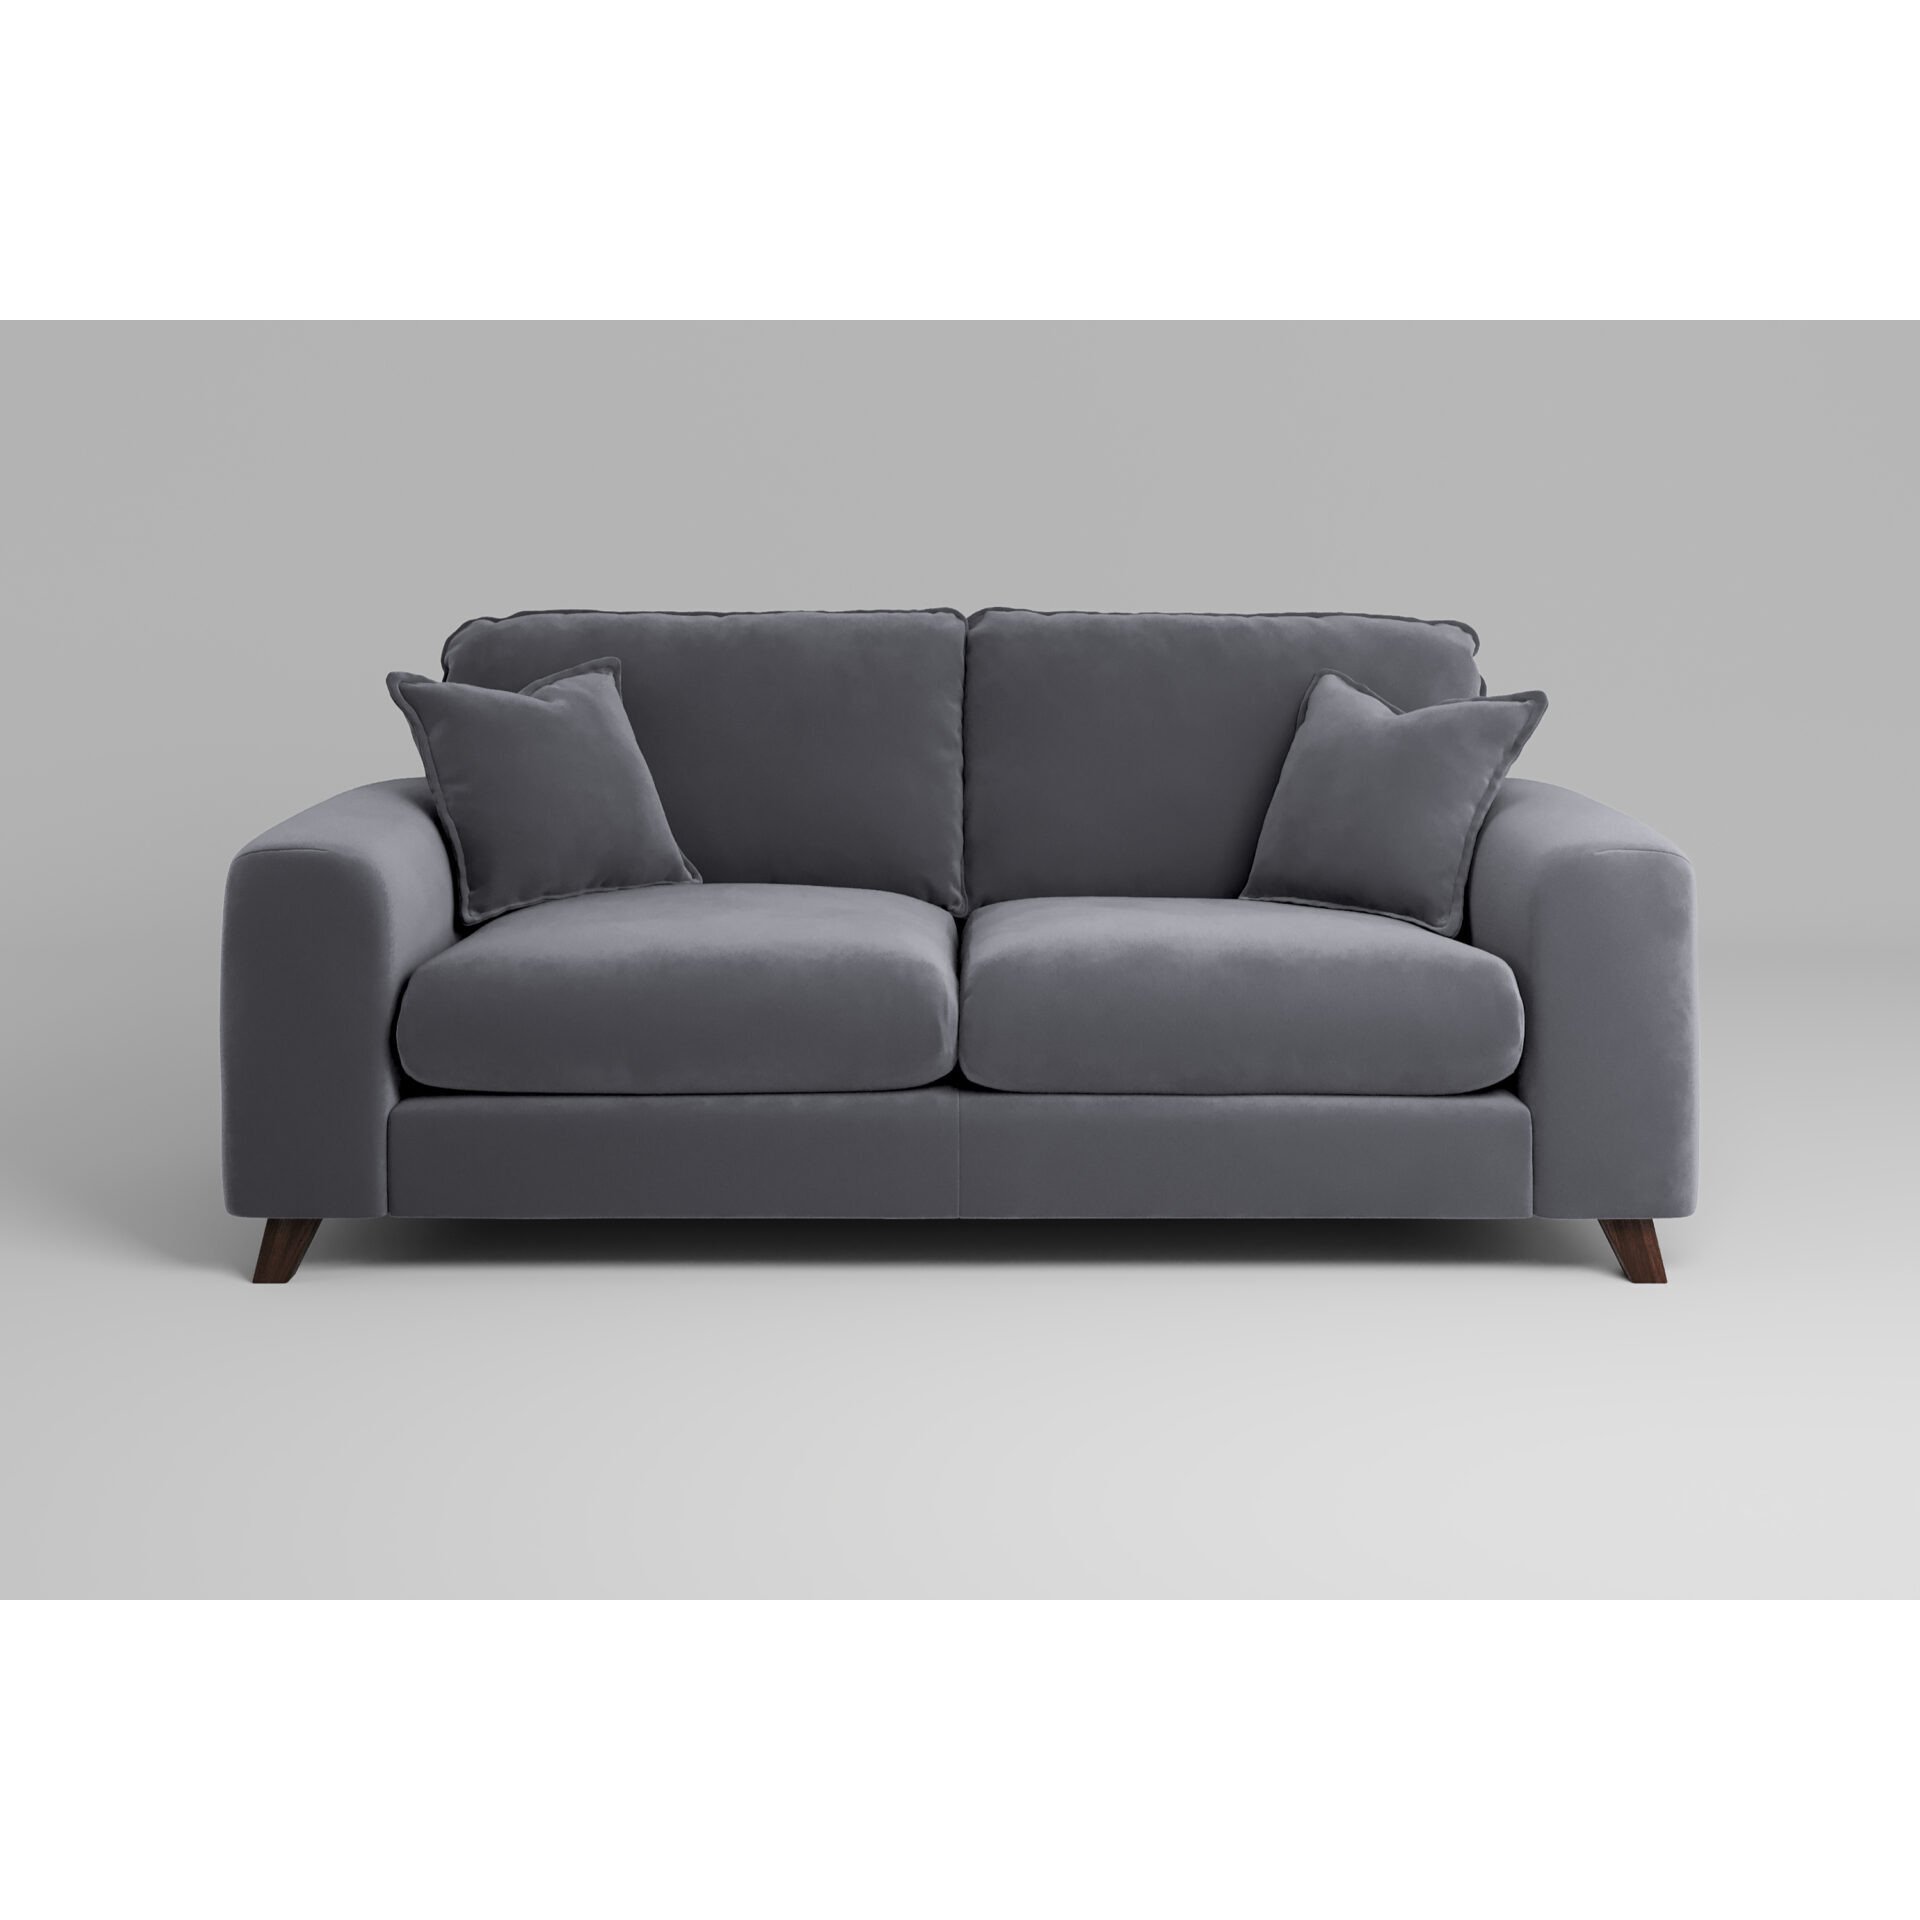 Grey 3 Seater Sofa - zofa Serenity 3 Seater Granite